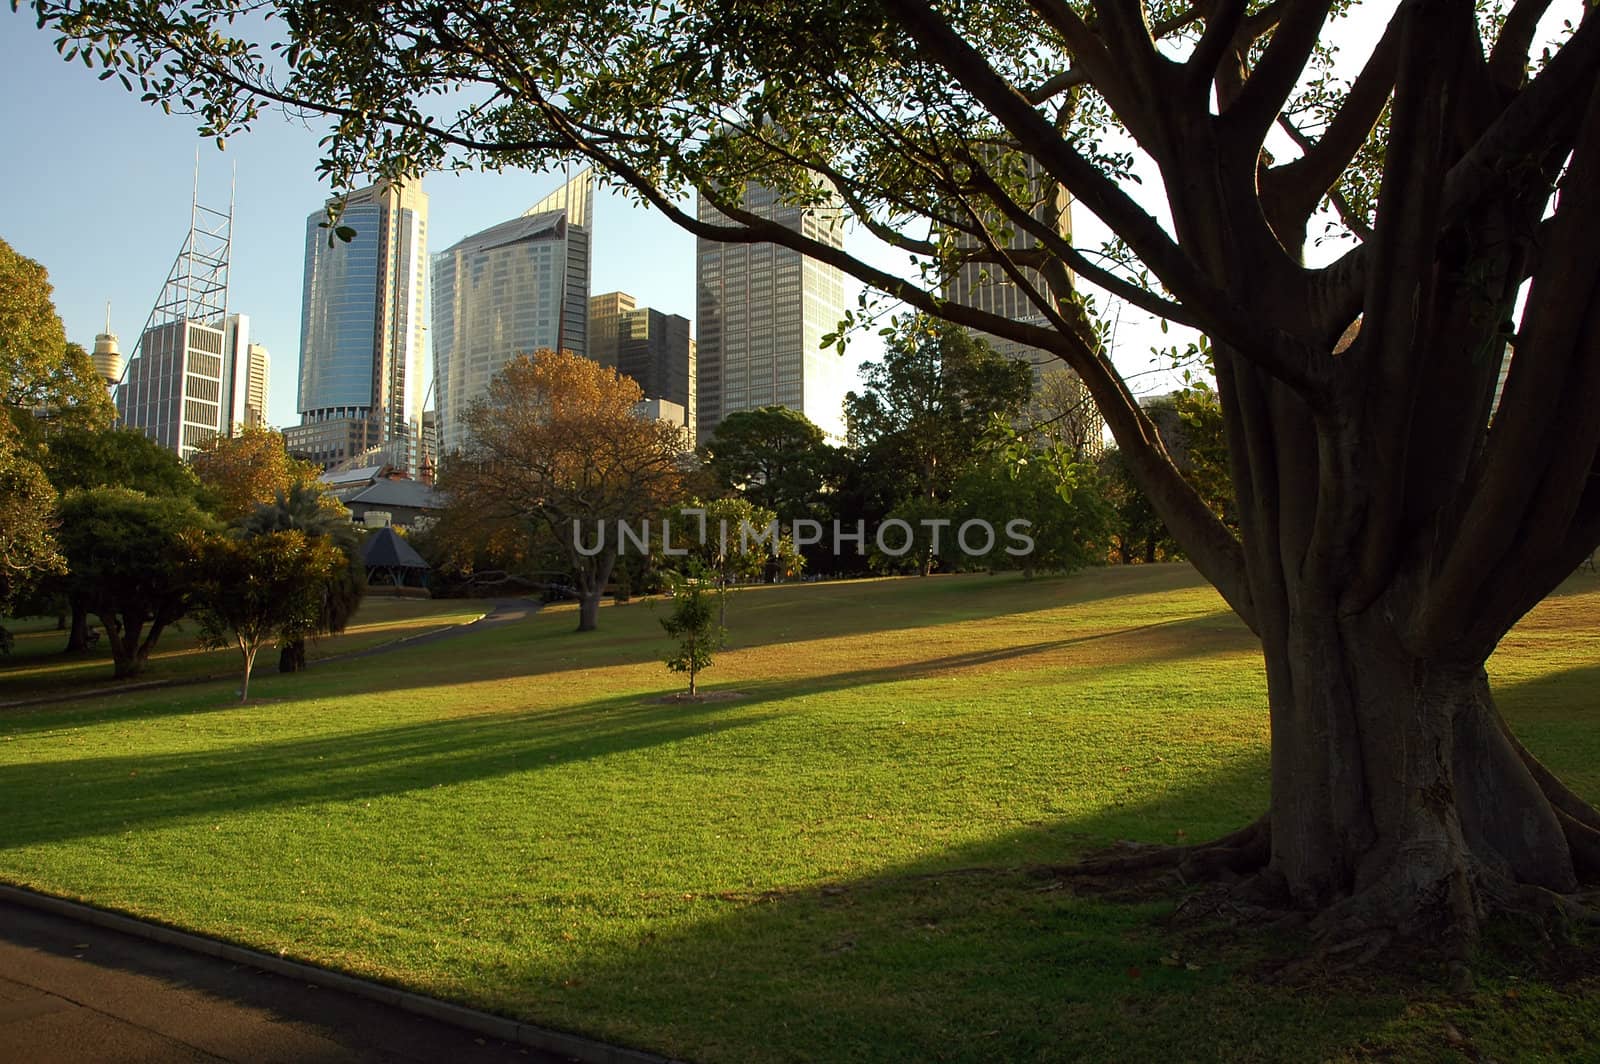 Royal Botanic Gardens in Sydney, skyscraper in background, evening